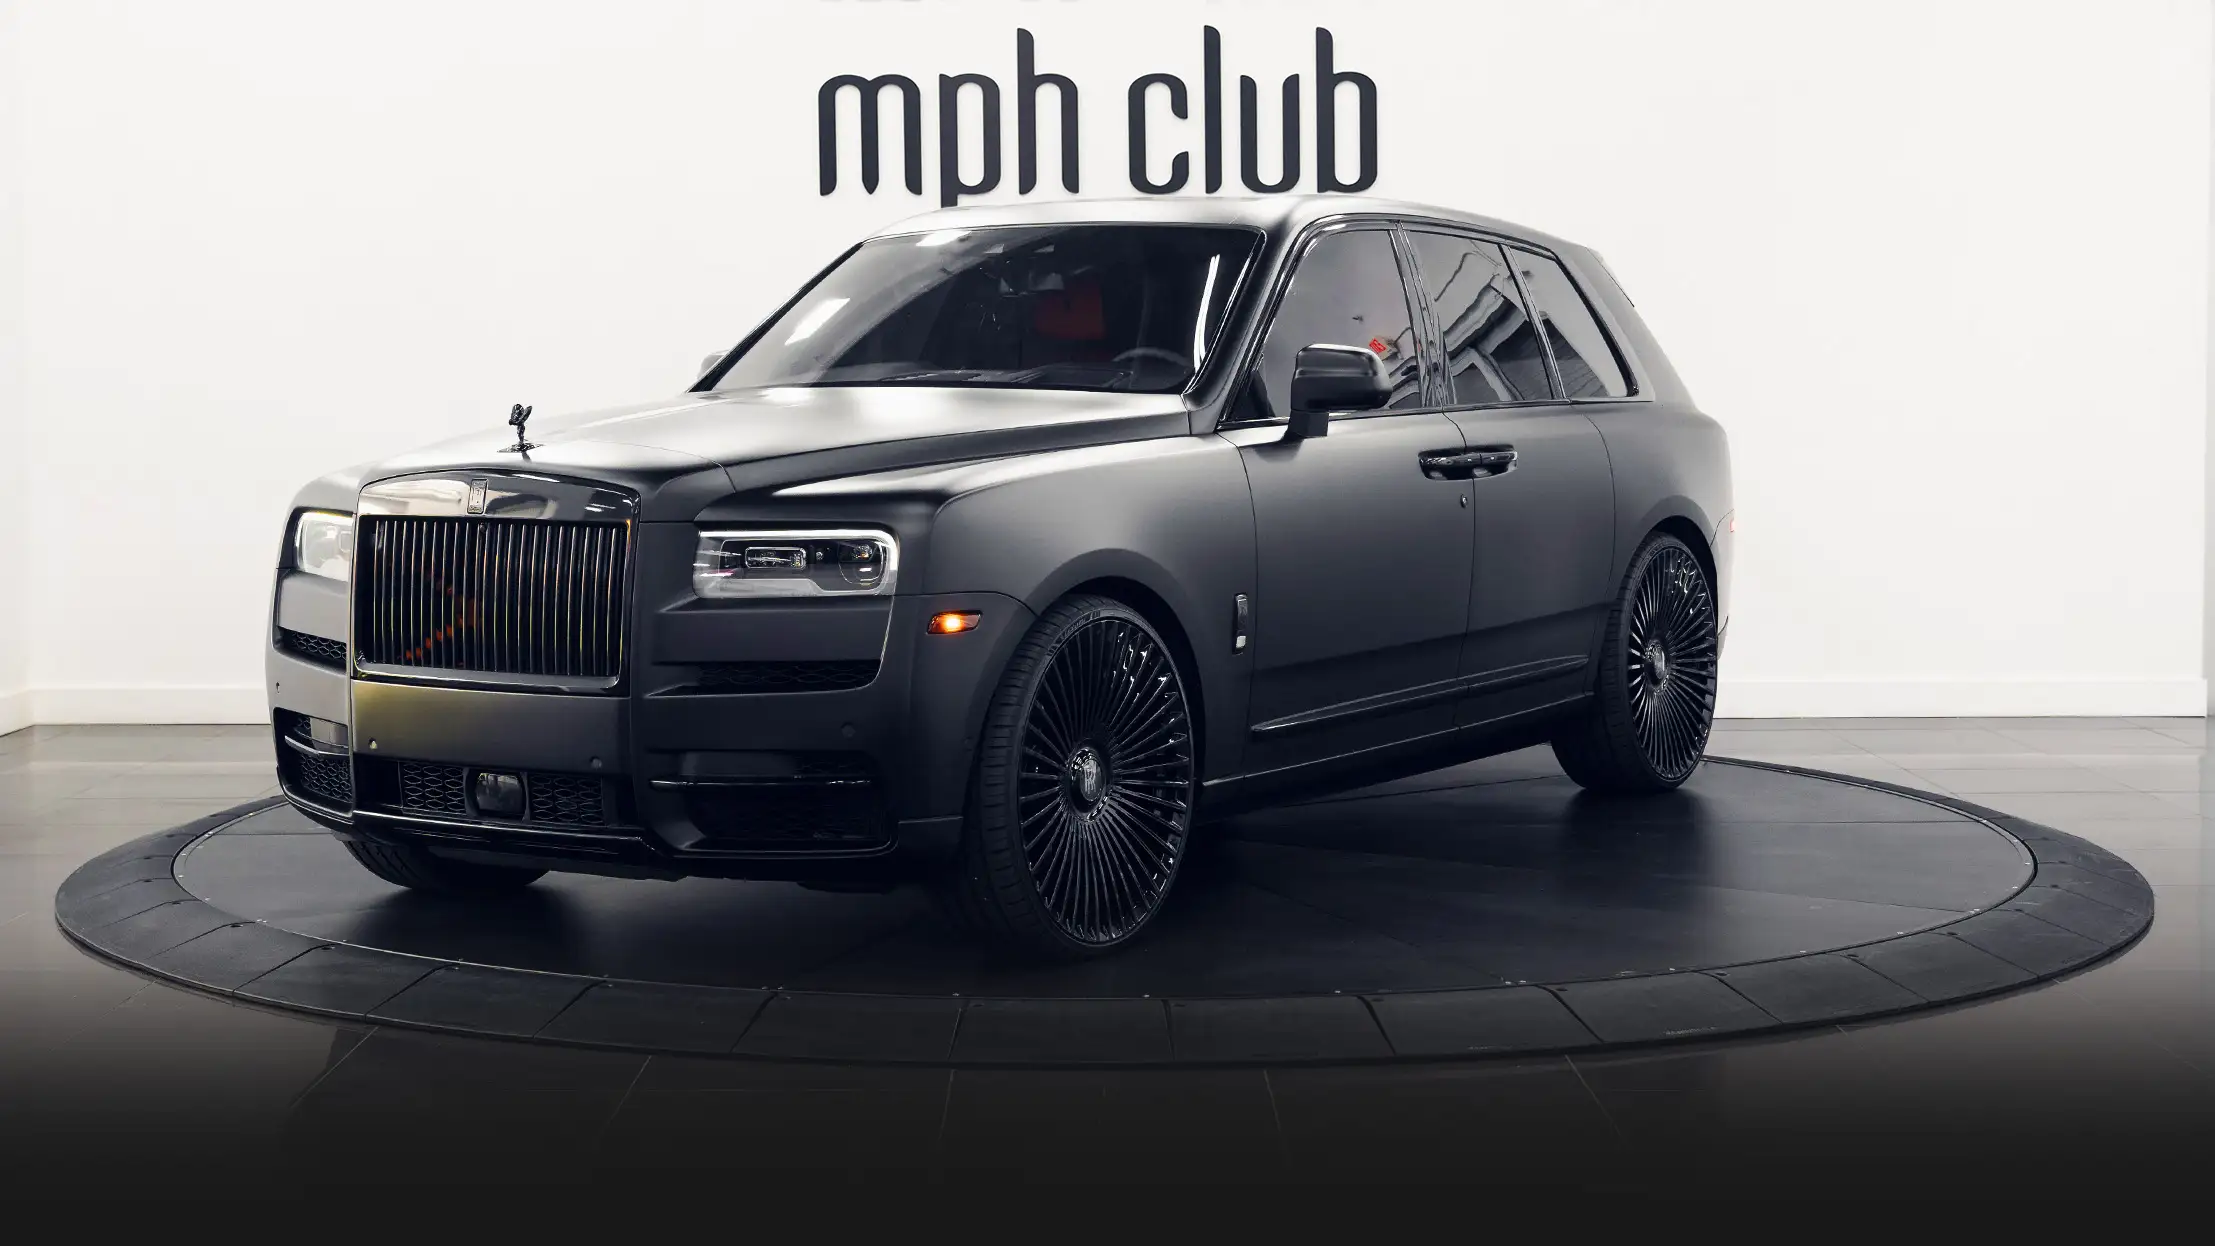 Matte black Rolls Royce Cullinan rental profile view mph club